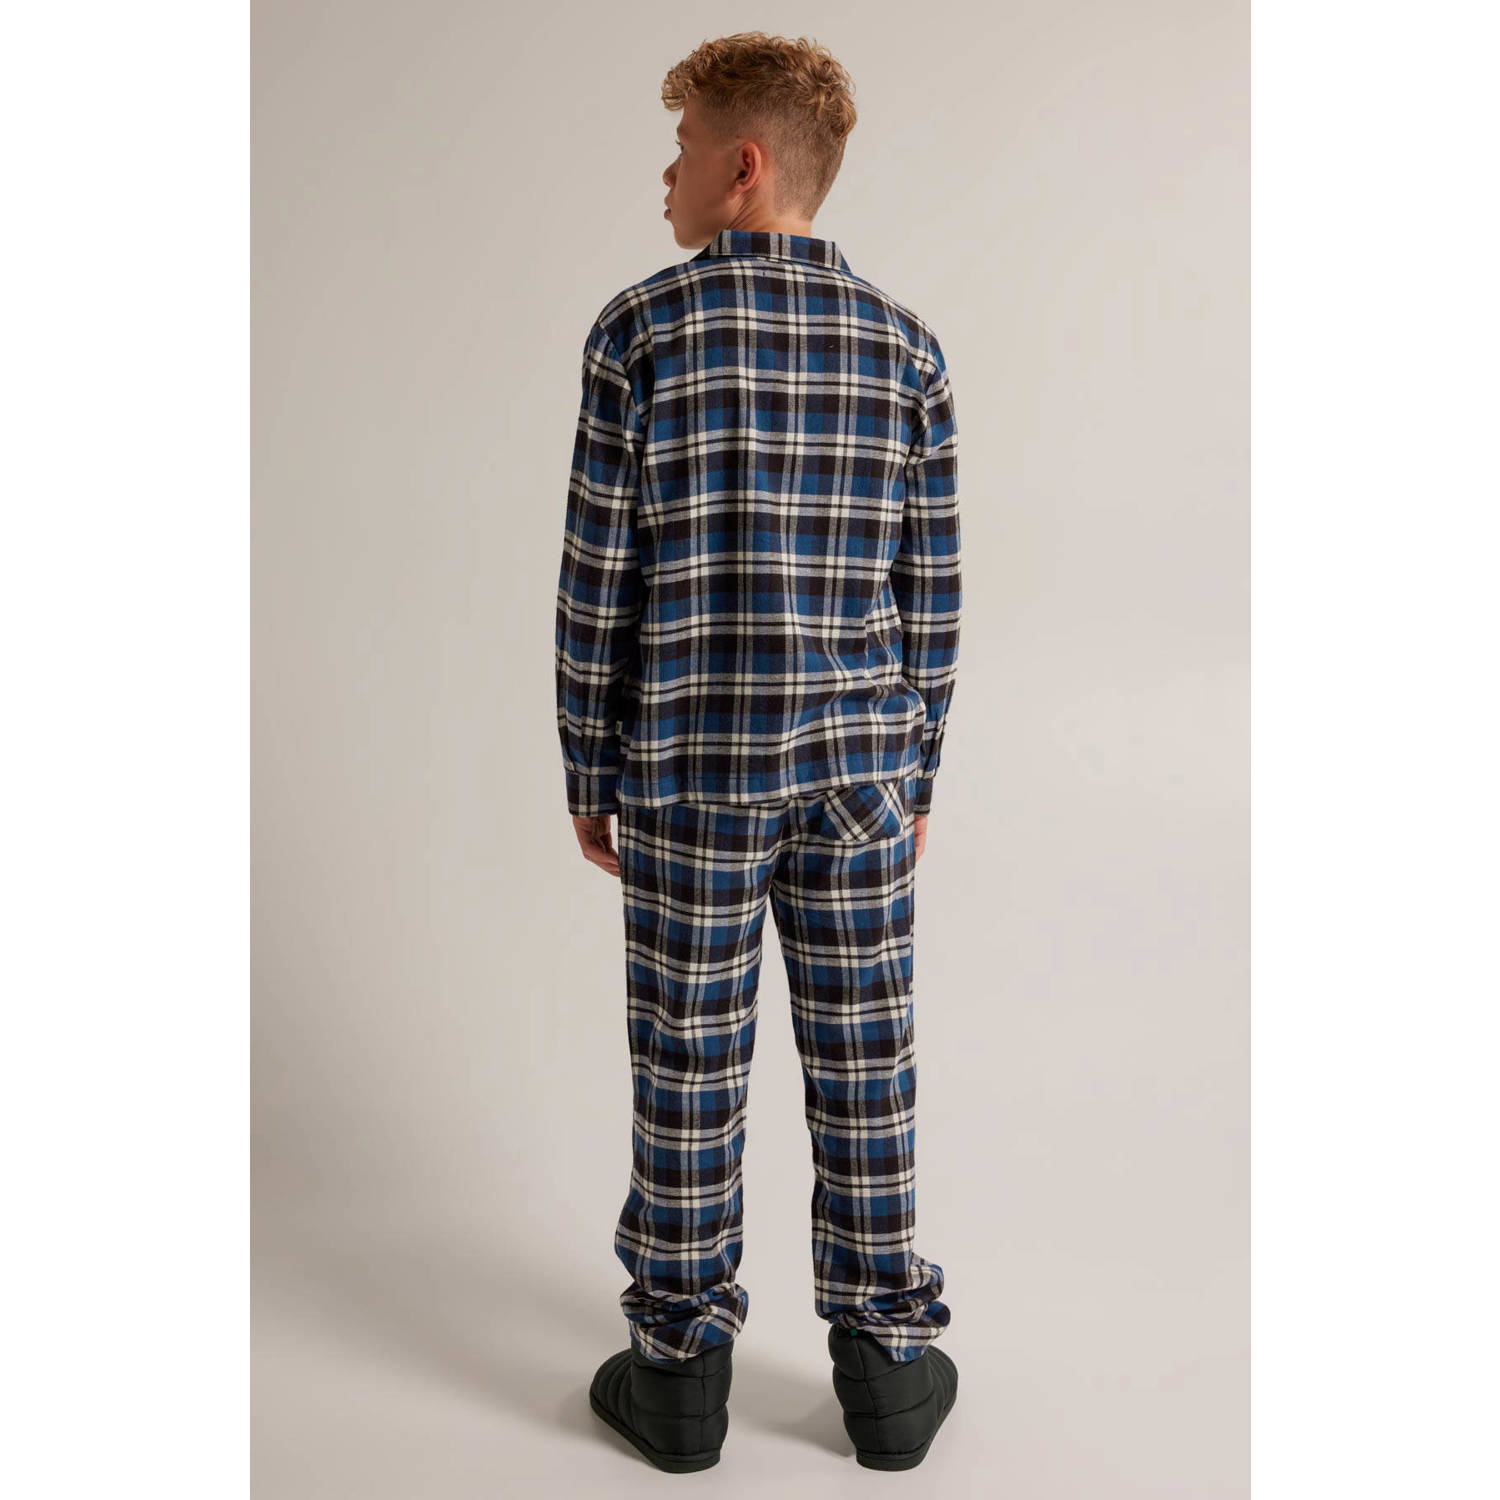 America Today geruite pyjamatop Nathan JR donkerblauw zwart wit